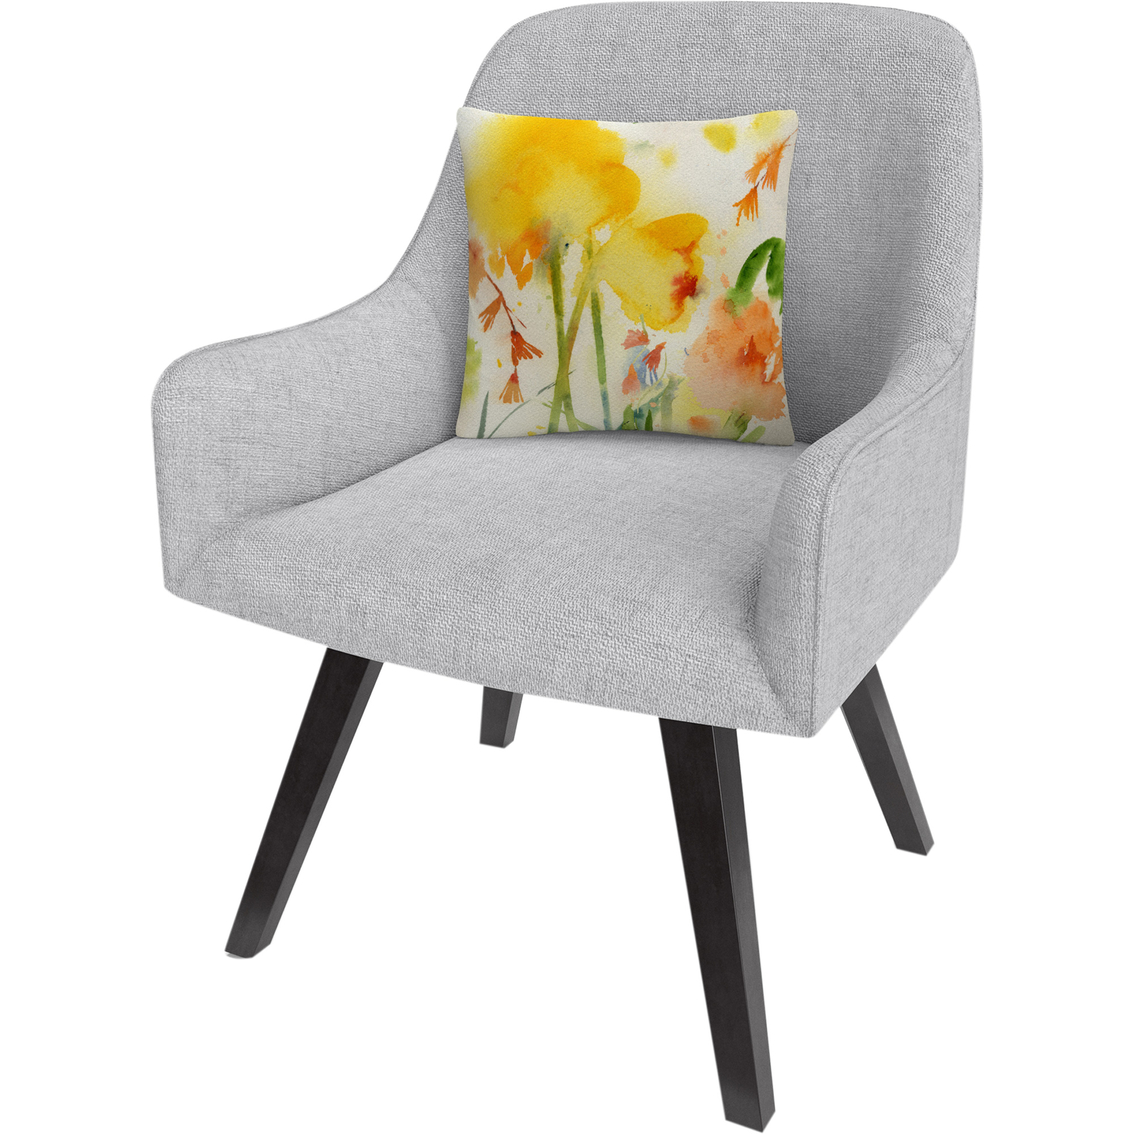 Trademark Fine Art Garden Yellows Floral Abstract Decorative Throw Pillow - Image 2 of 2